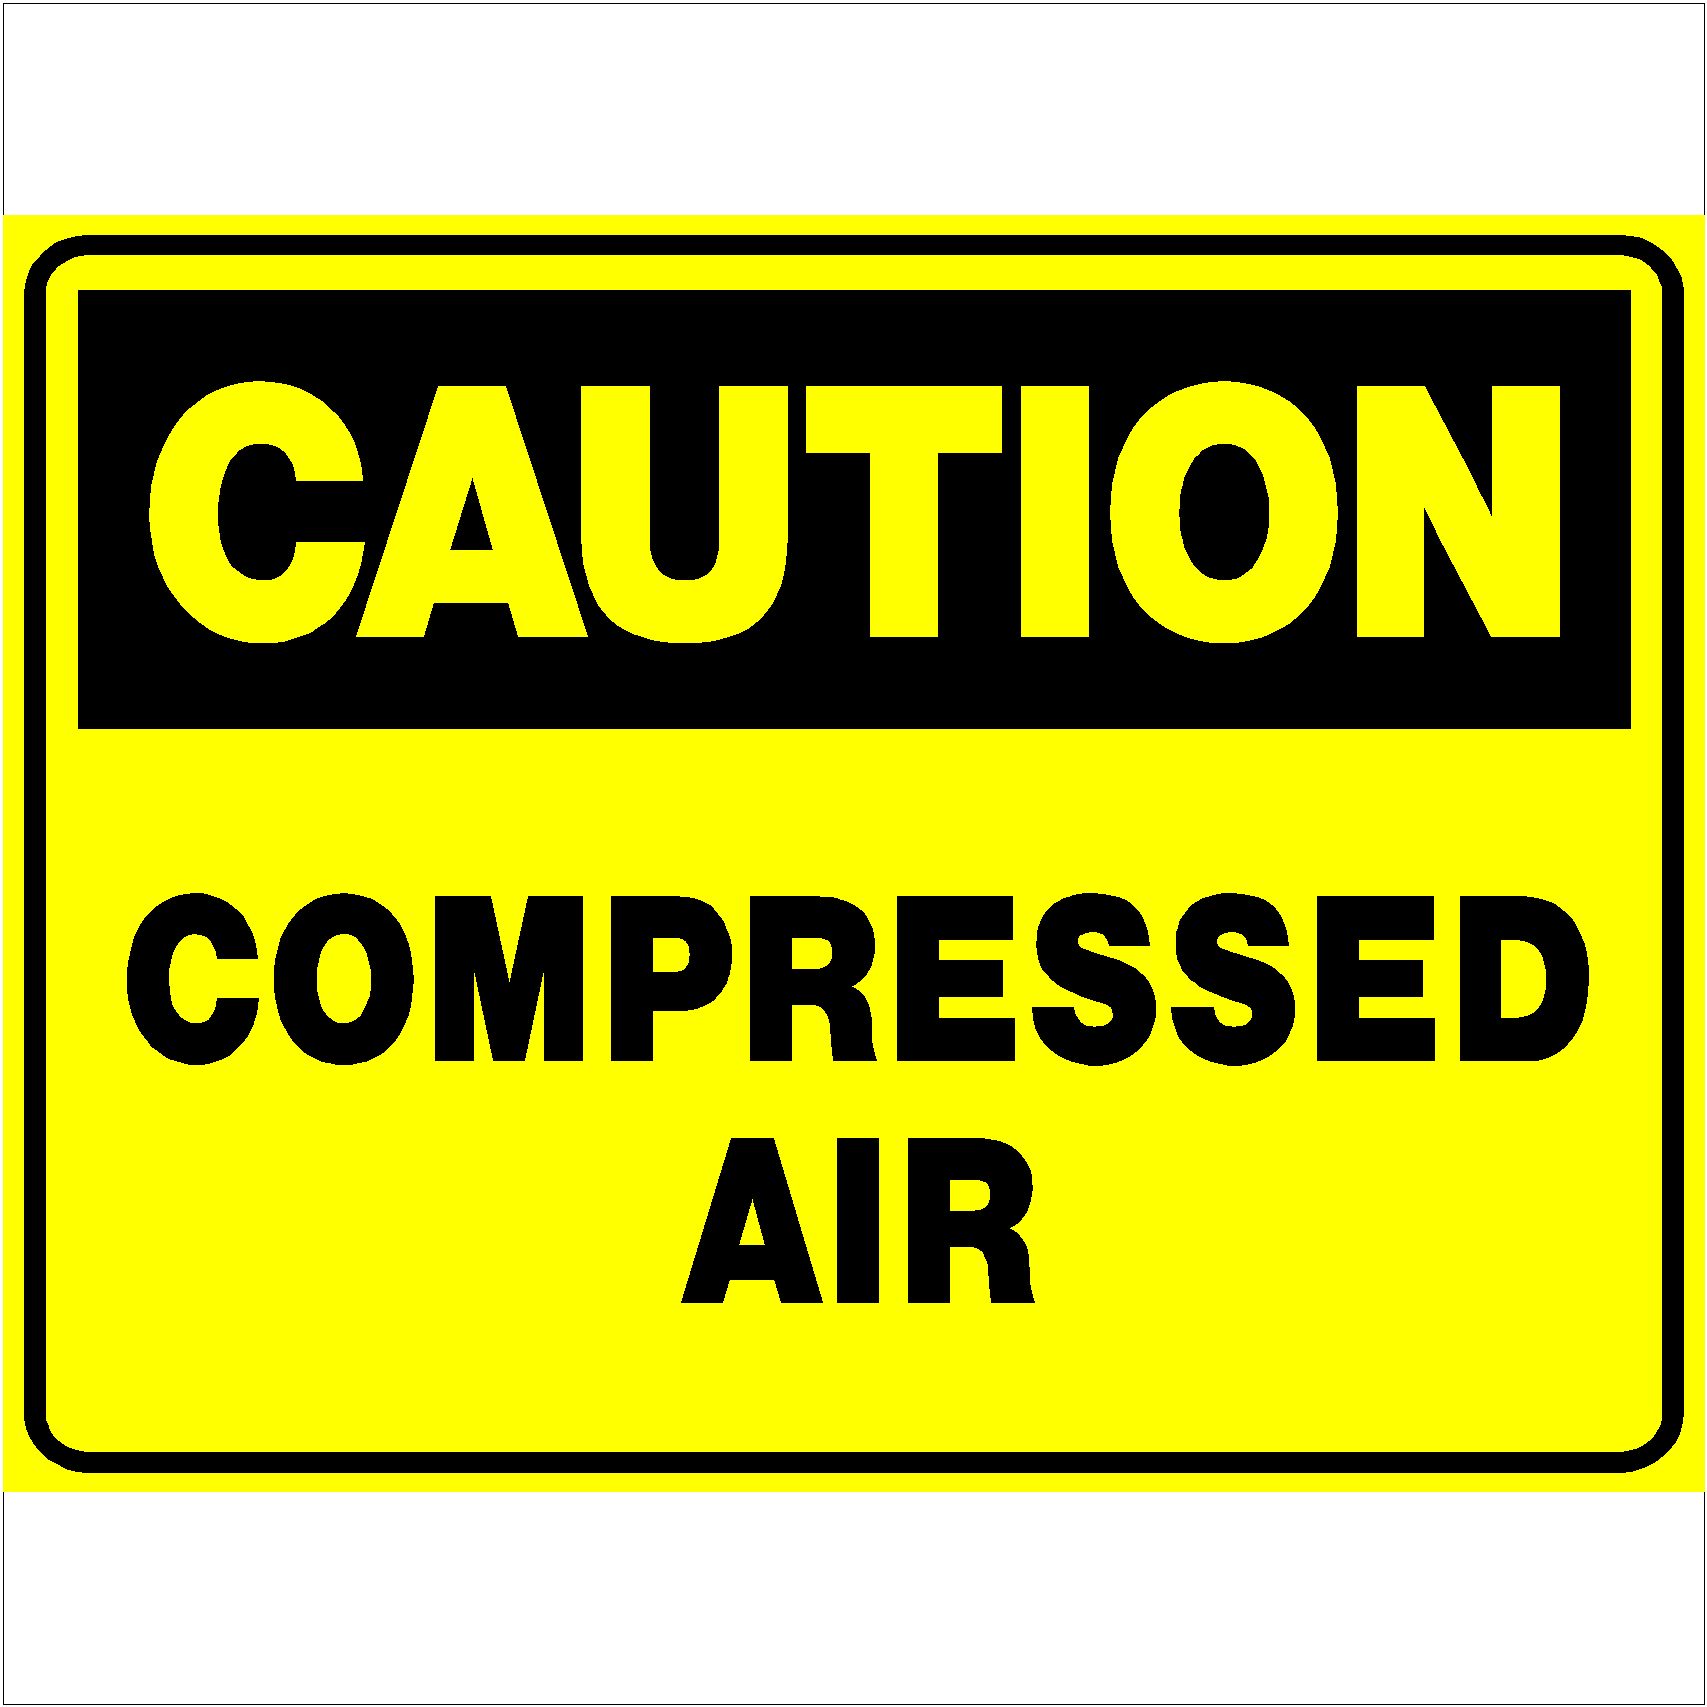 Caution Compressed Air